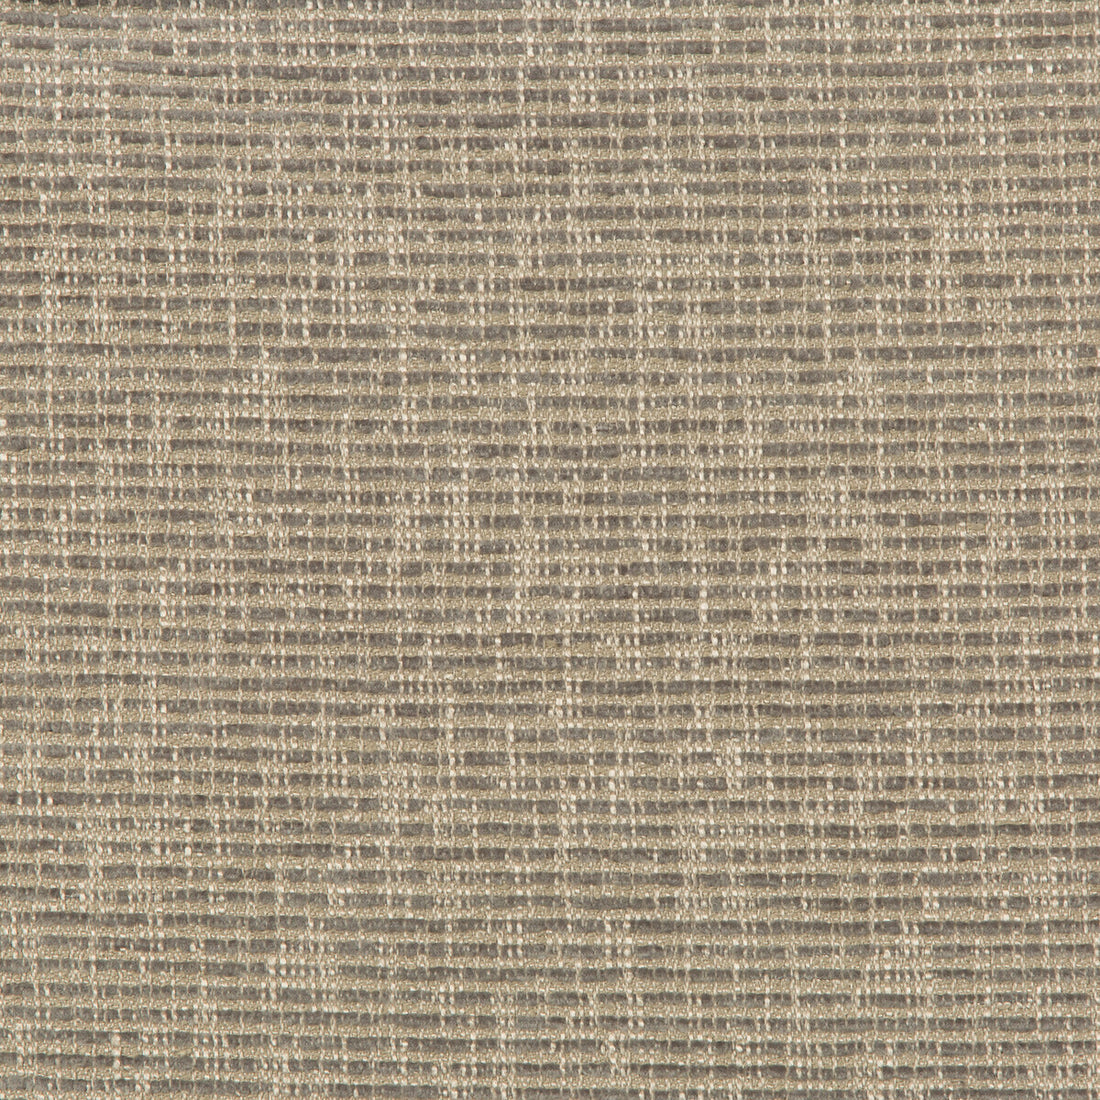 Kravet Smart fabric in 35940-21 color - pattern 35940.21.0 - by Kravet Smart in the Performance Kravetarmor collection